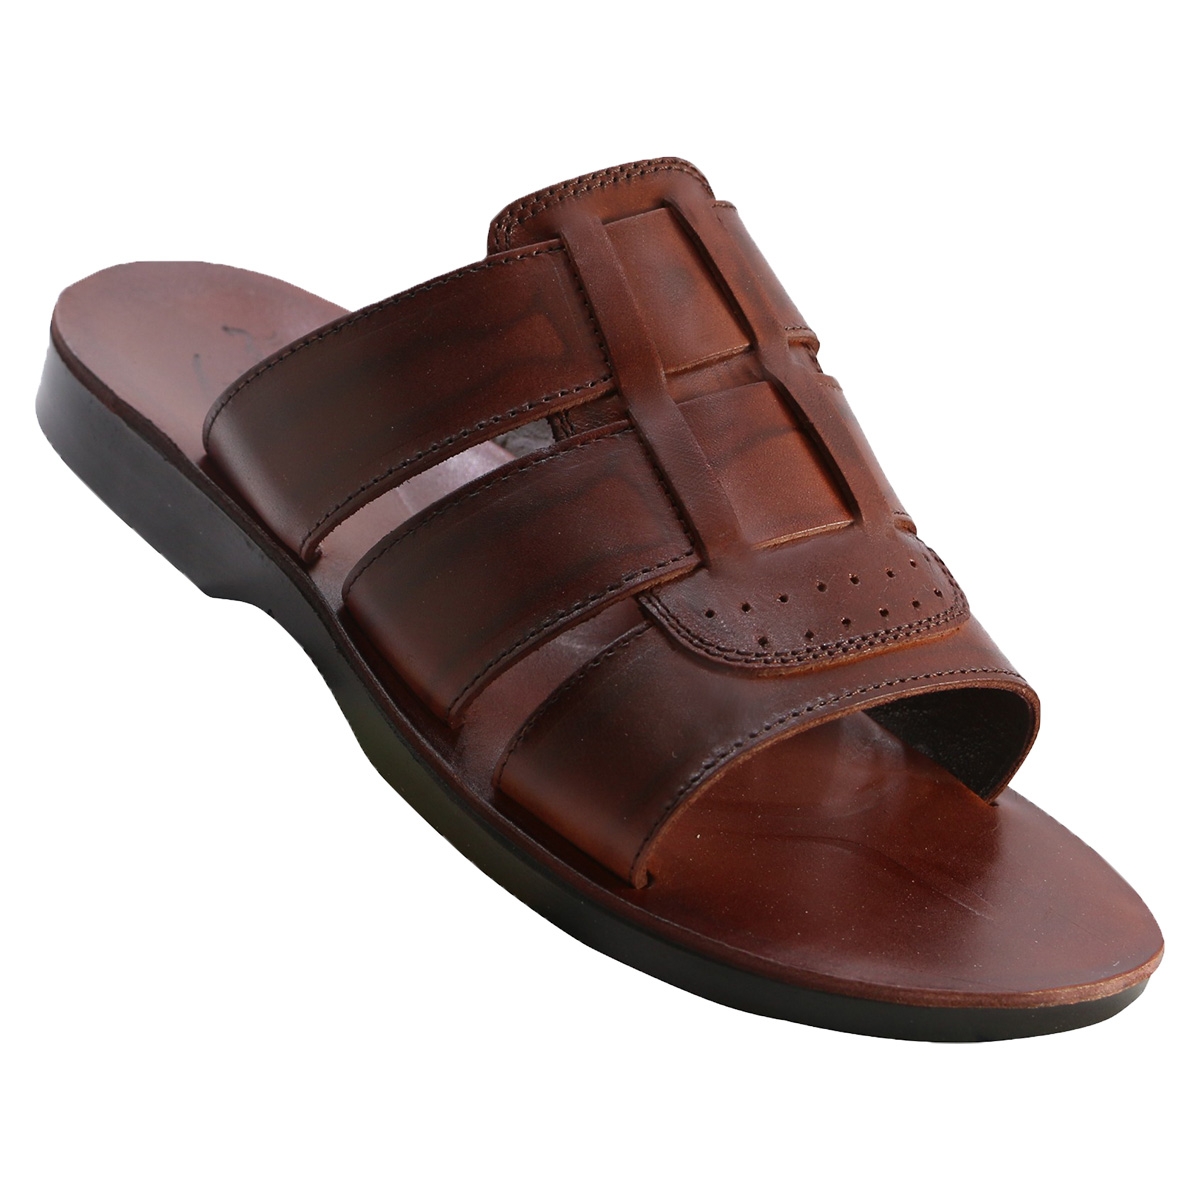 Azarya Handmade Leather Jesus Sandals - For Men - 1